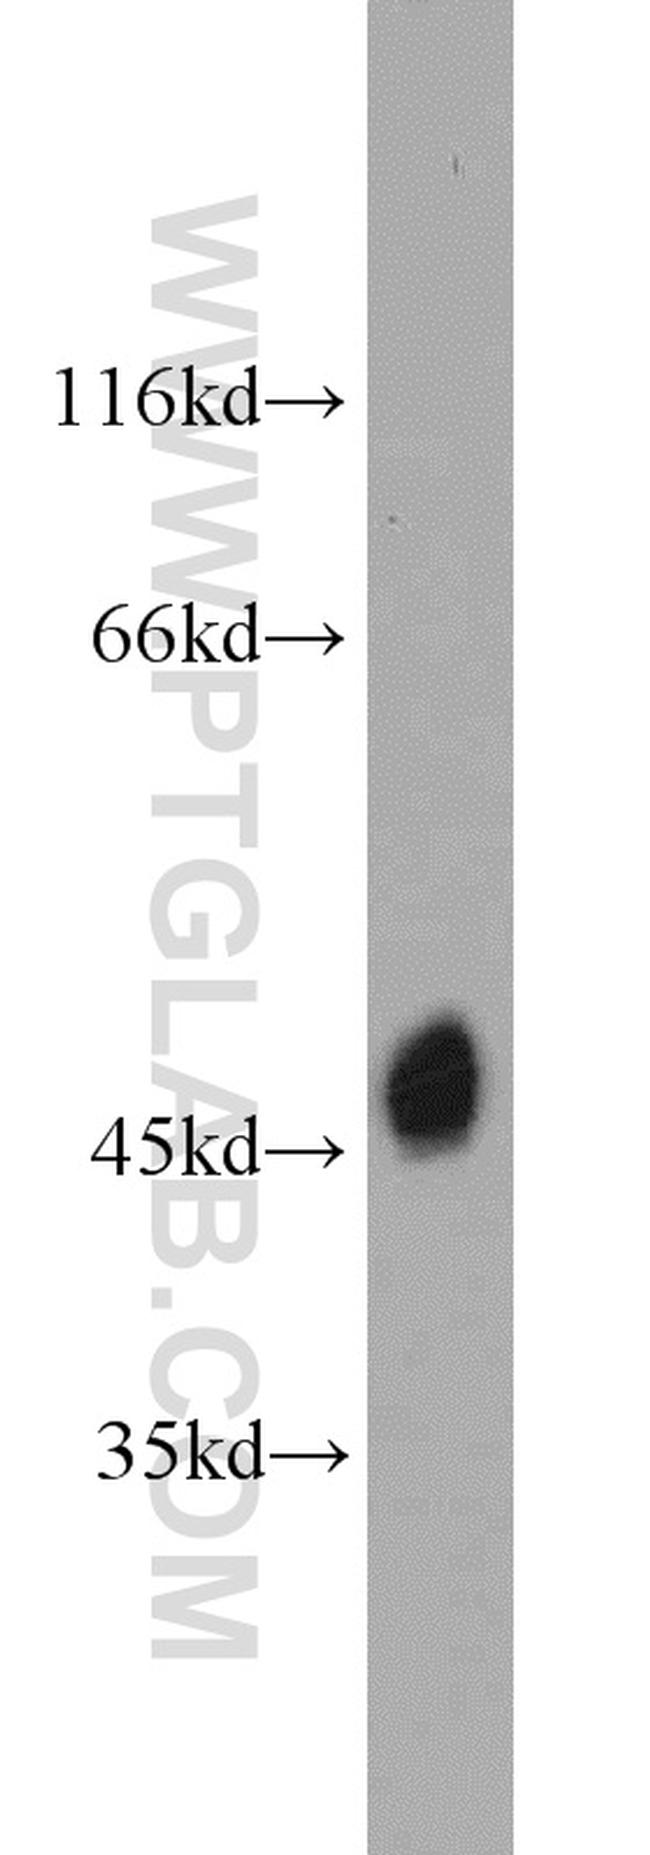 MAGT1 Antibody in Western Blot (WB)